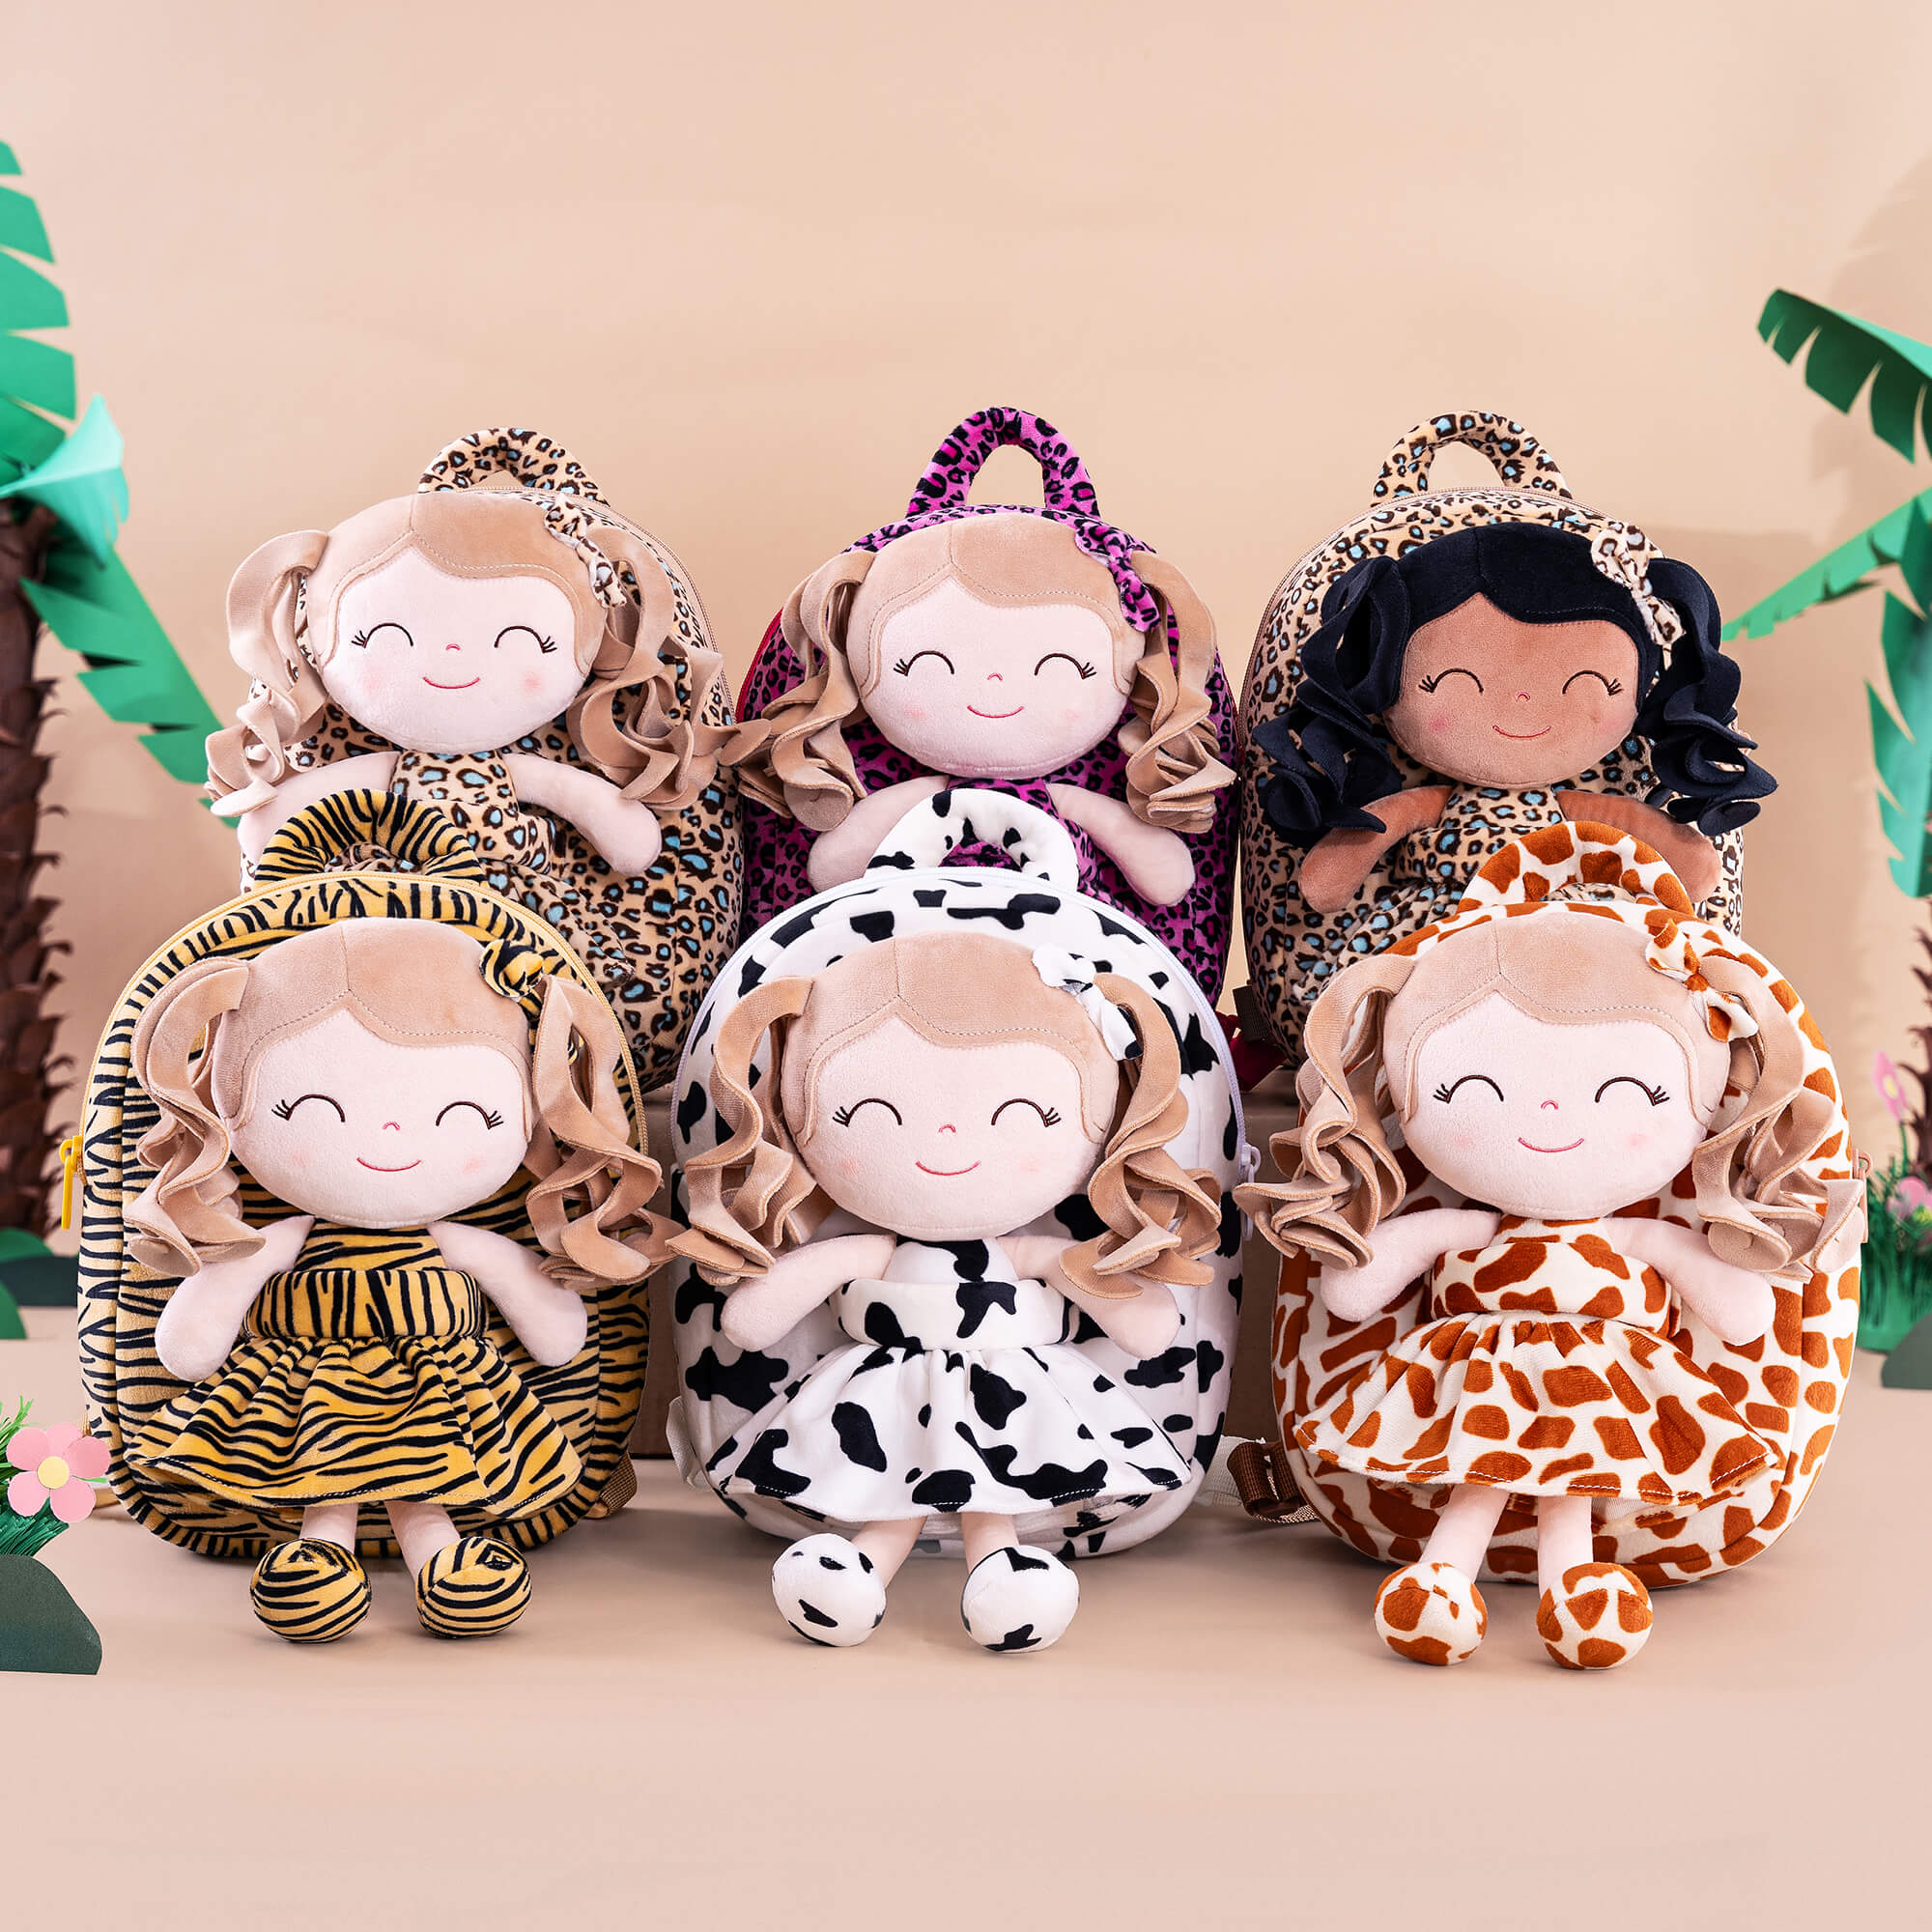 Gloveleya 9-inch Personalized Plush Curly Animal Dolls Backpack Tiger